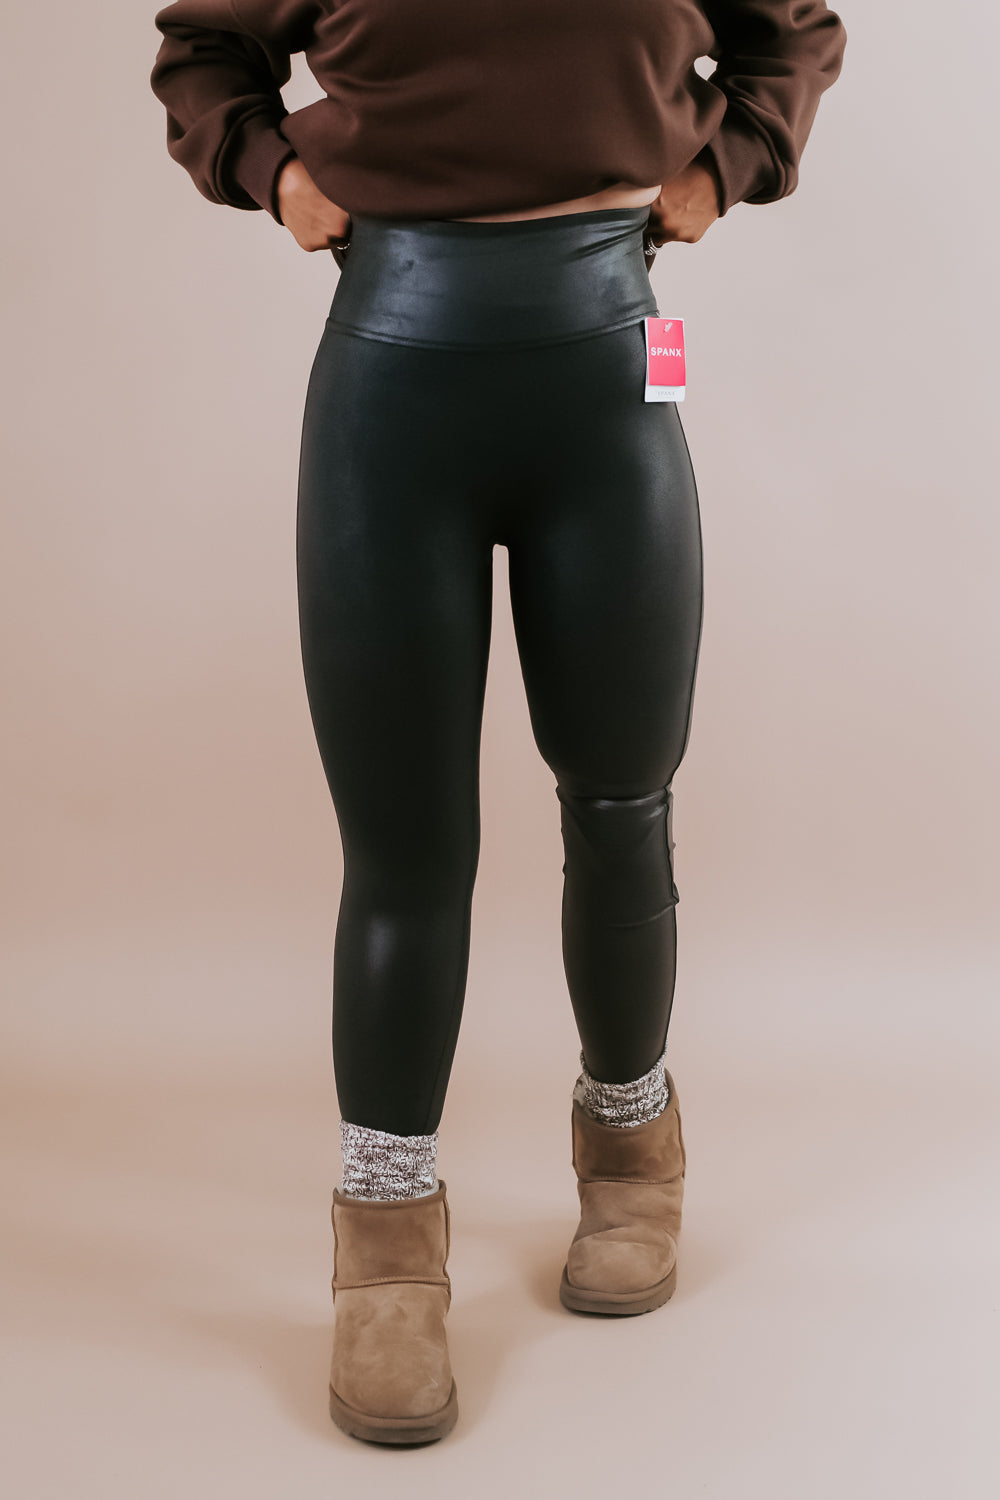 Spanx black moto leggings size small - $34 - From Melinda